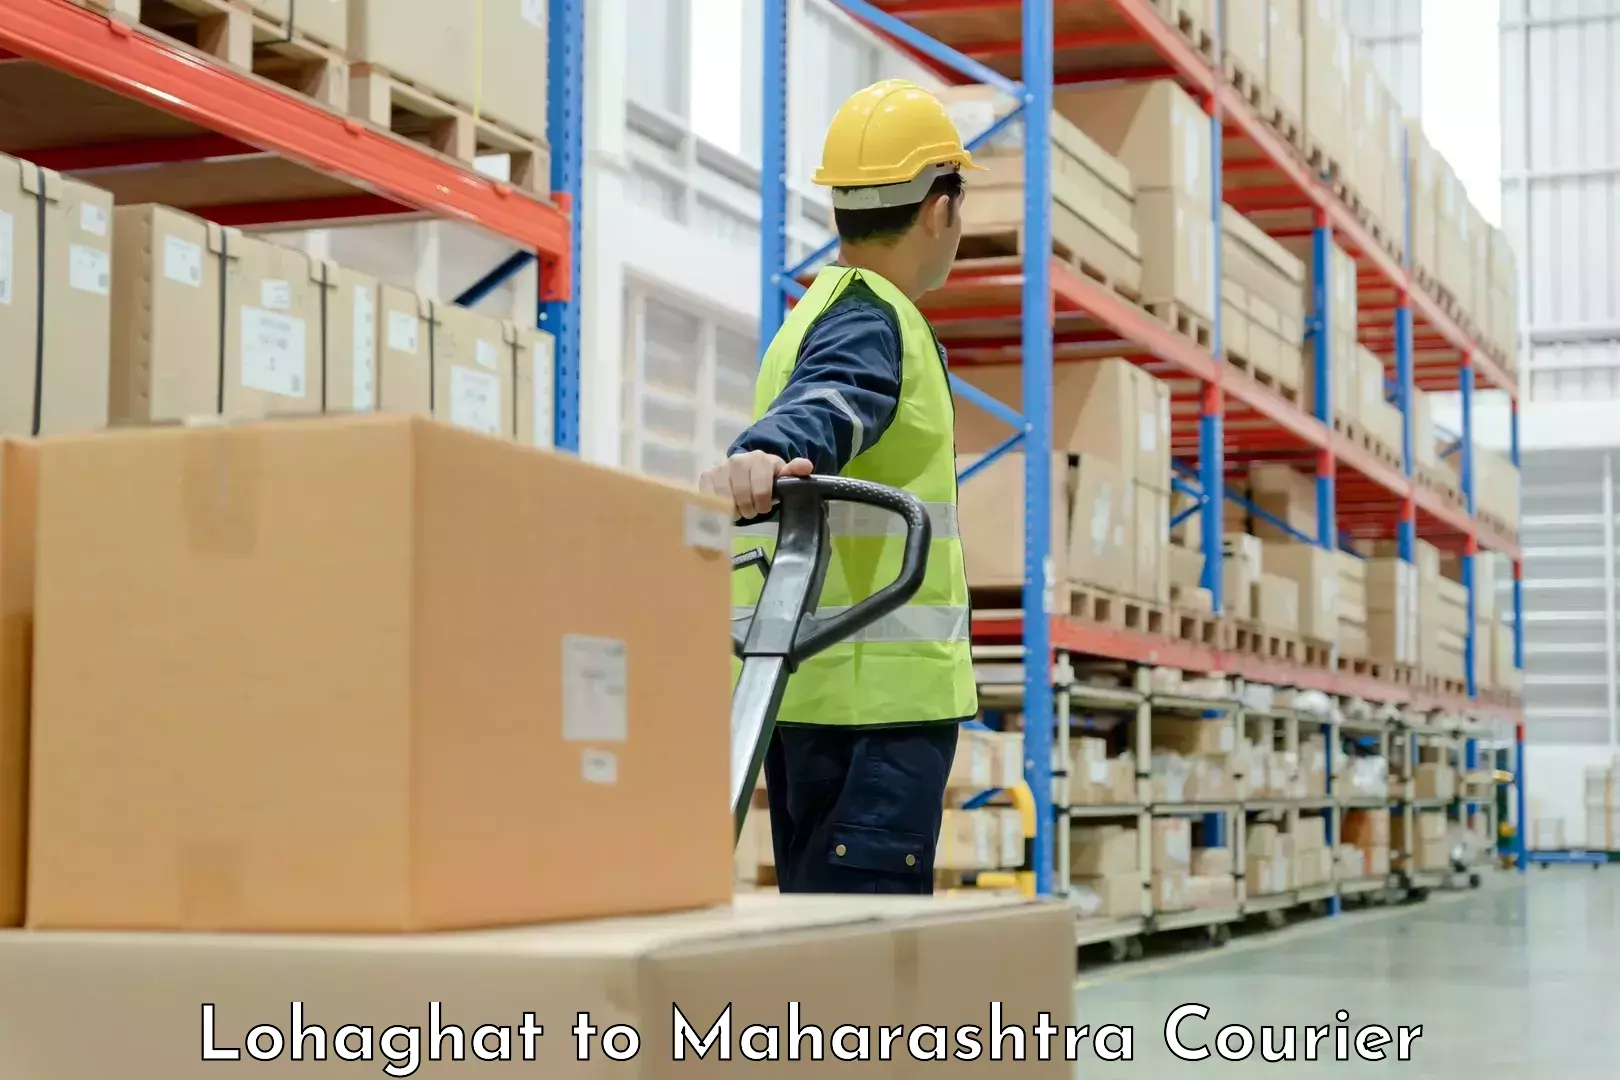 Trusted moving company Lohaghat to Navi Mumbai